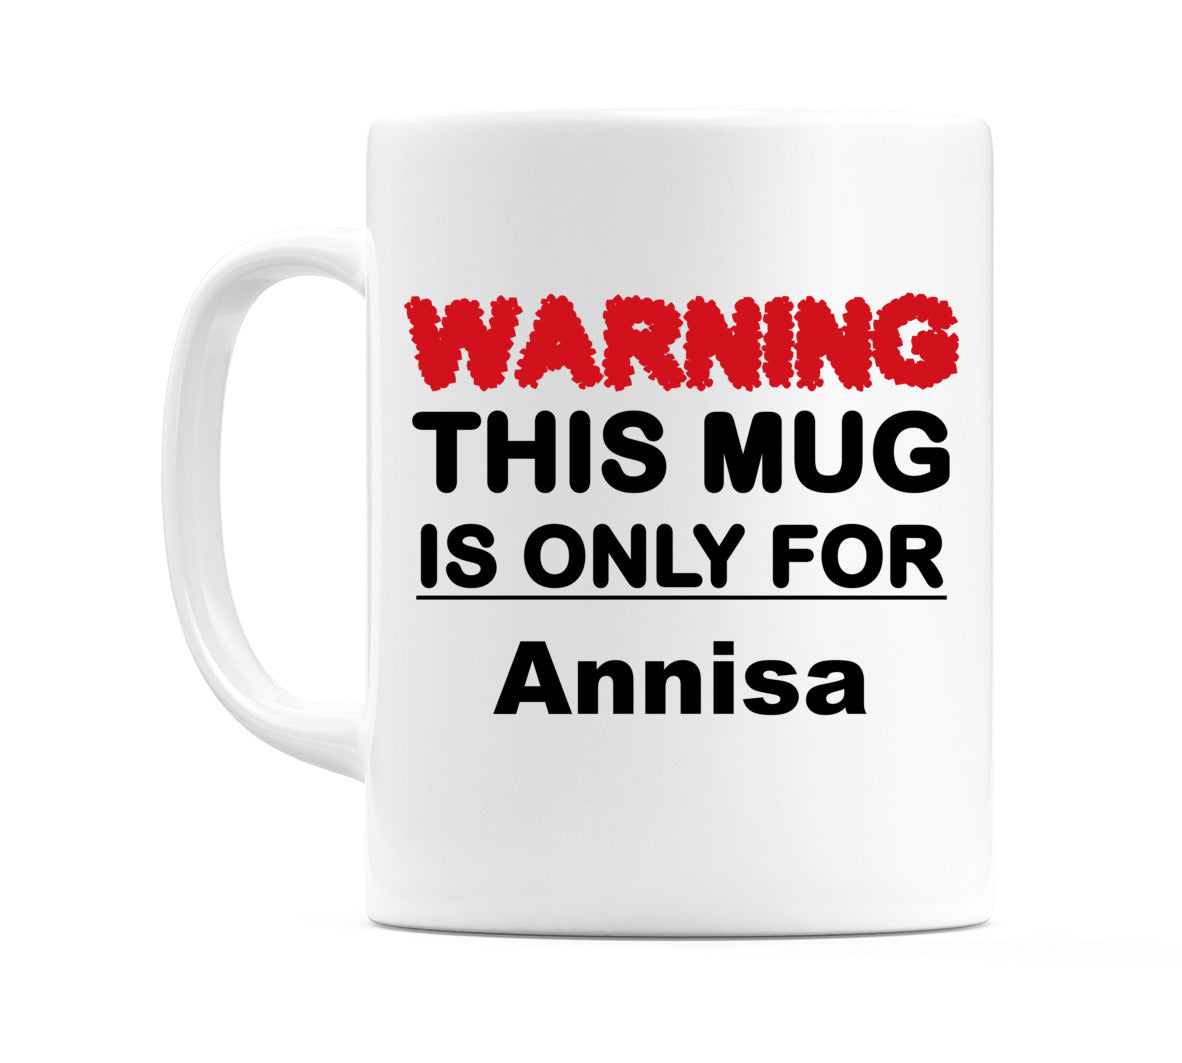 Warning This Mug is ONLY for Annisa Mug